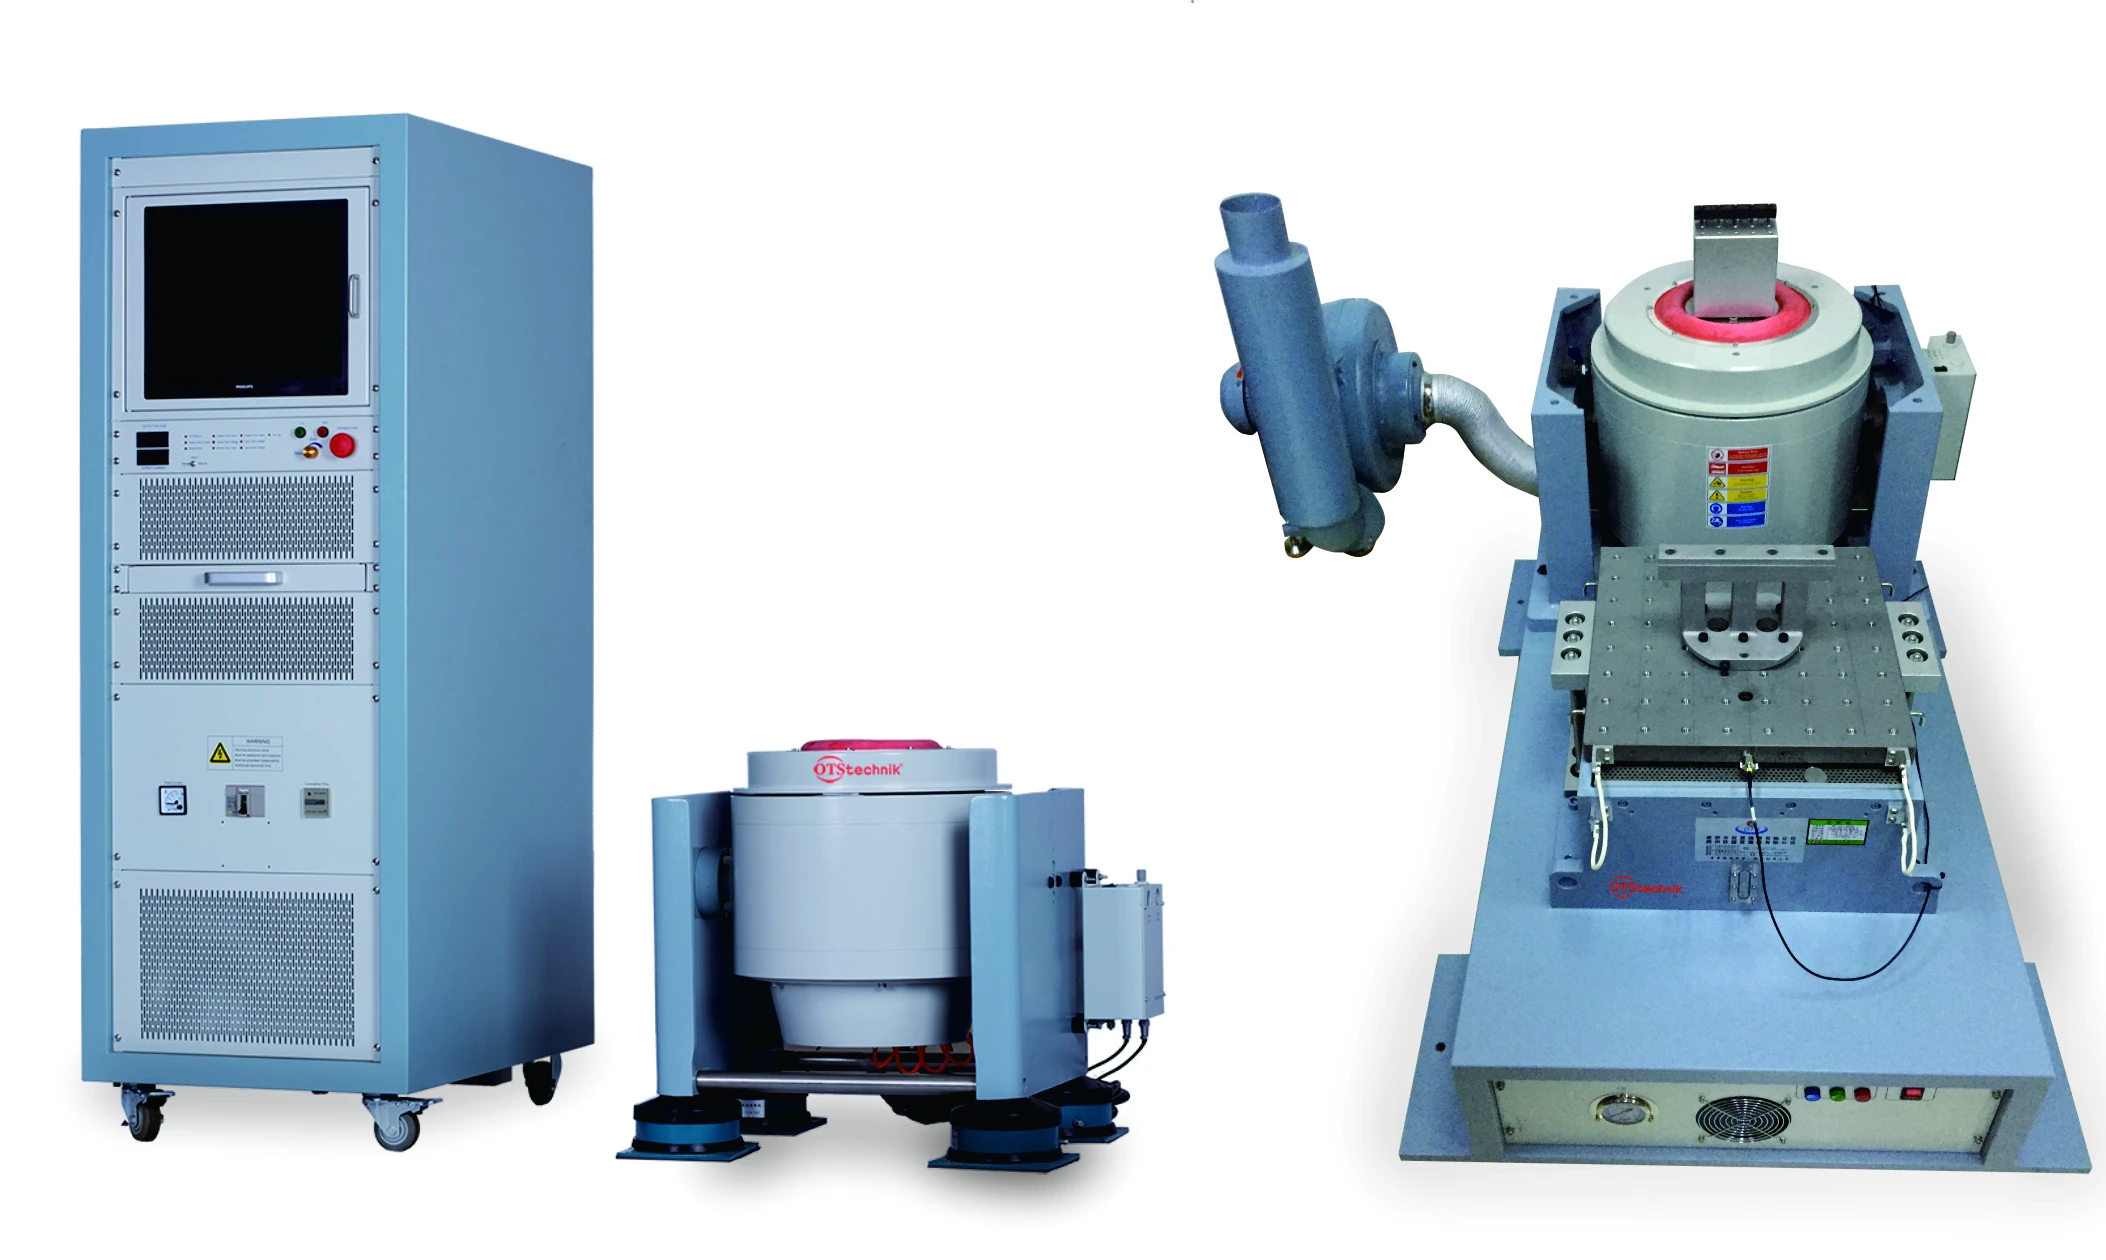 Manufacturer in China Vibration Shaker Table Machine, Electrodynamic Shaker